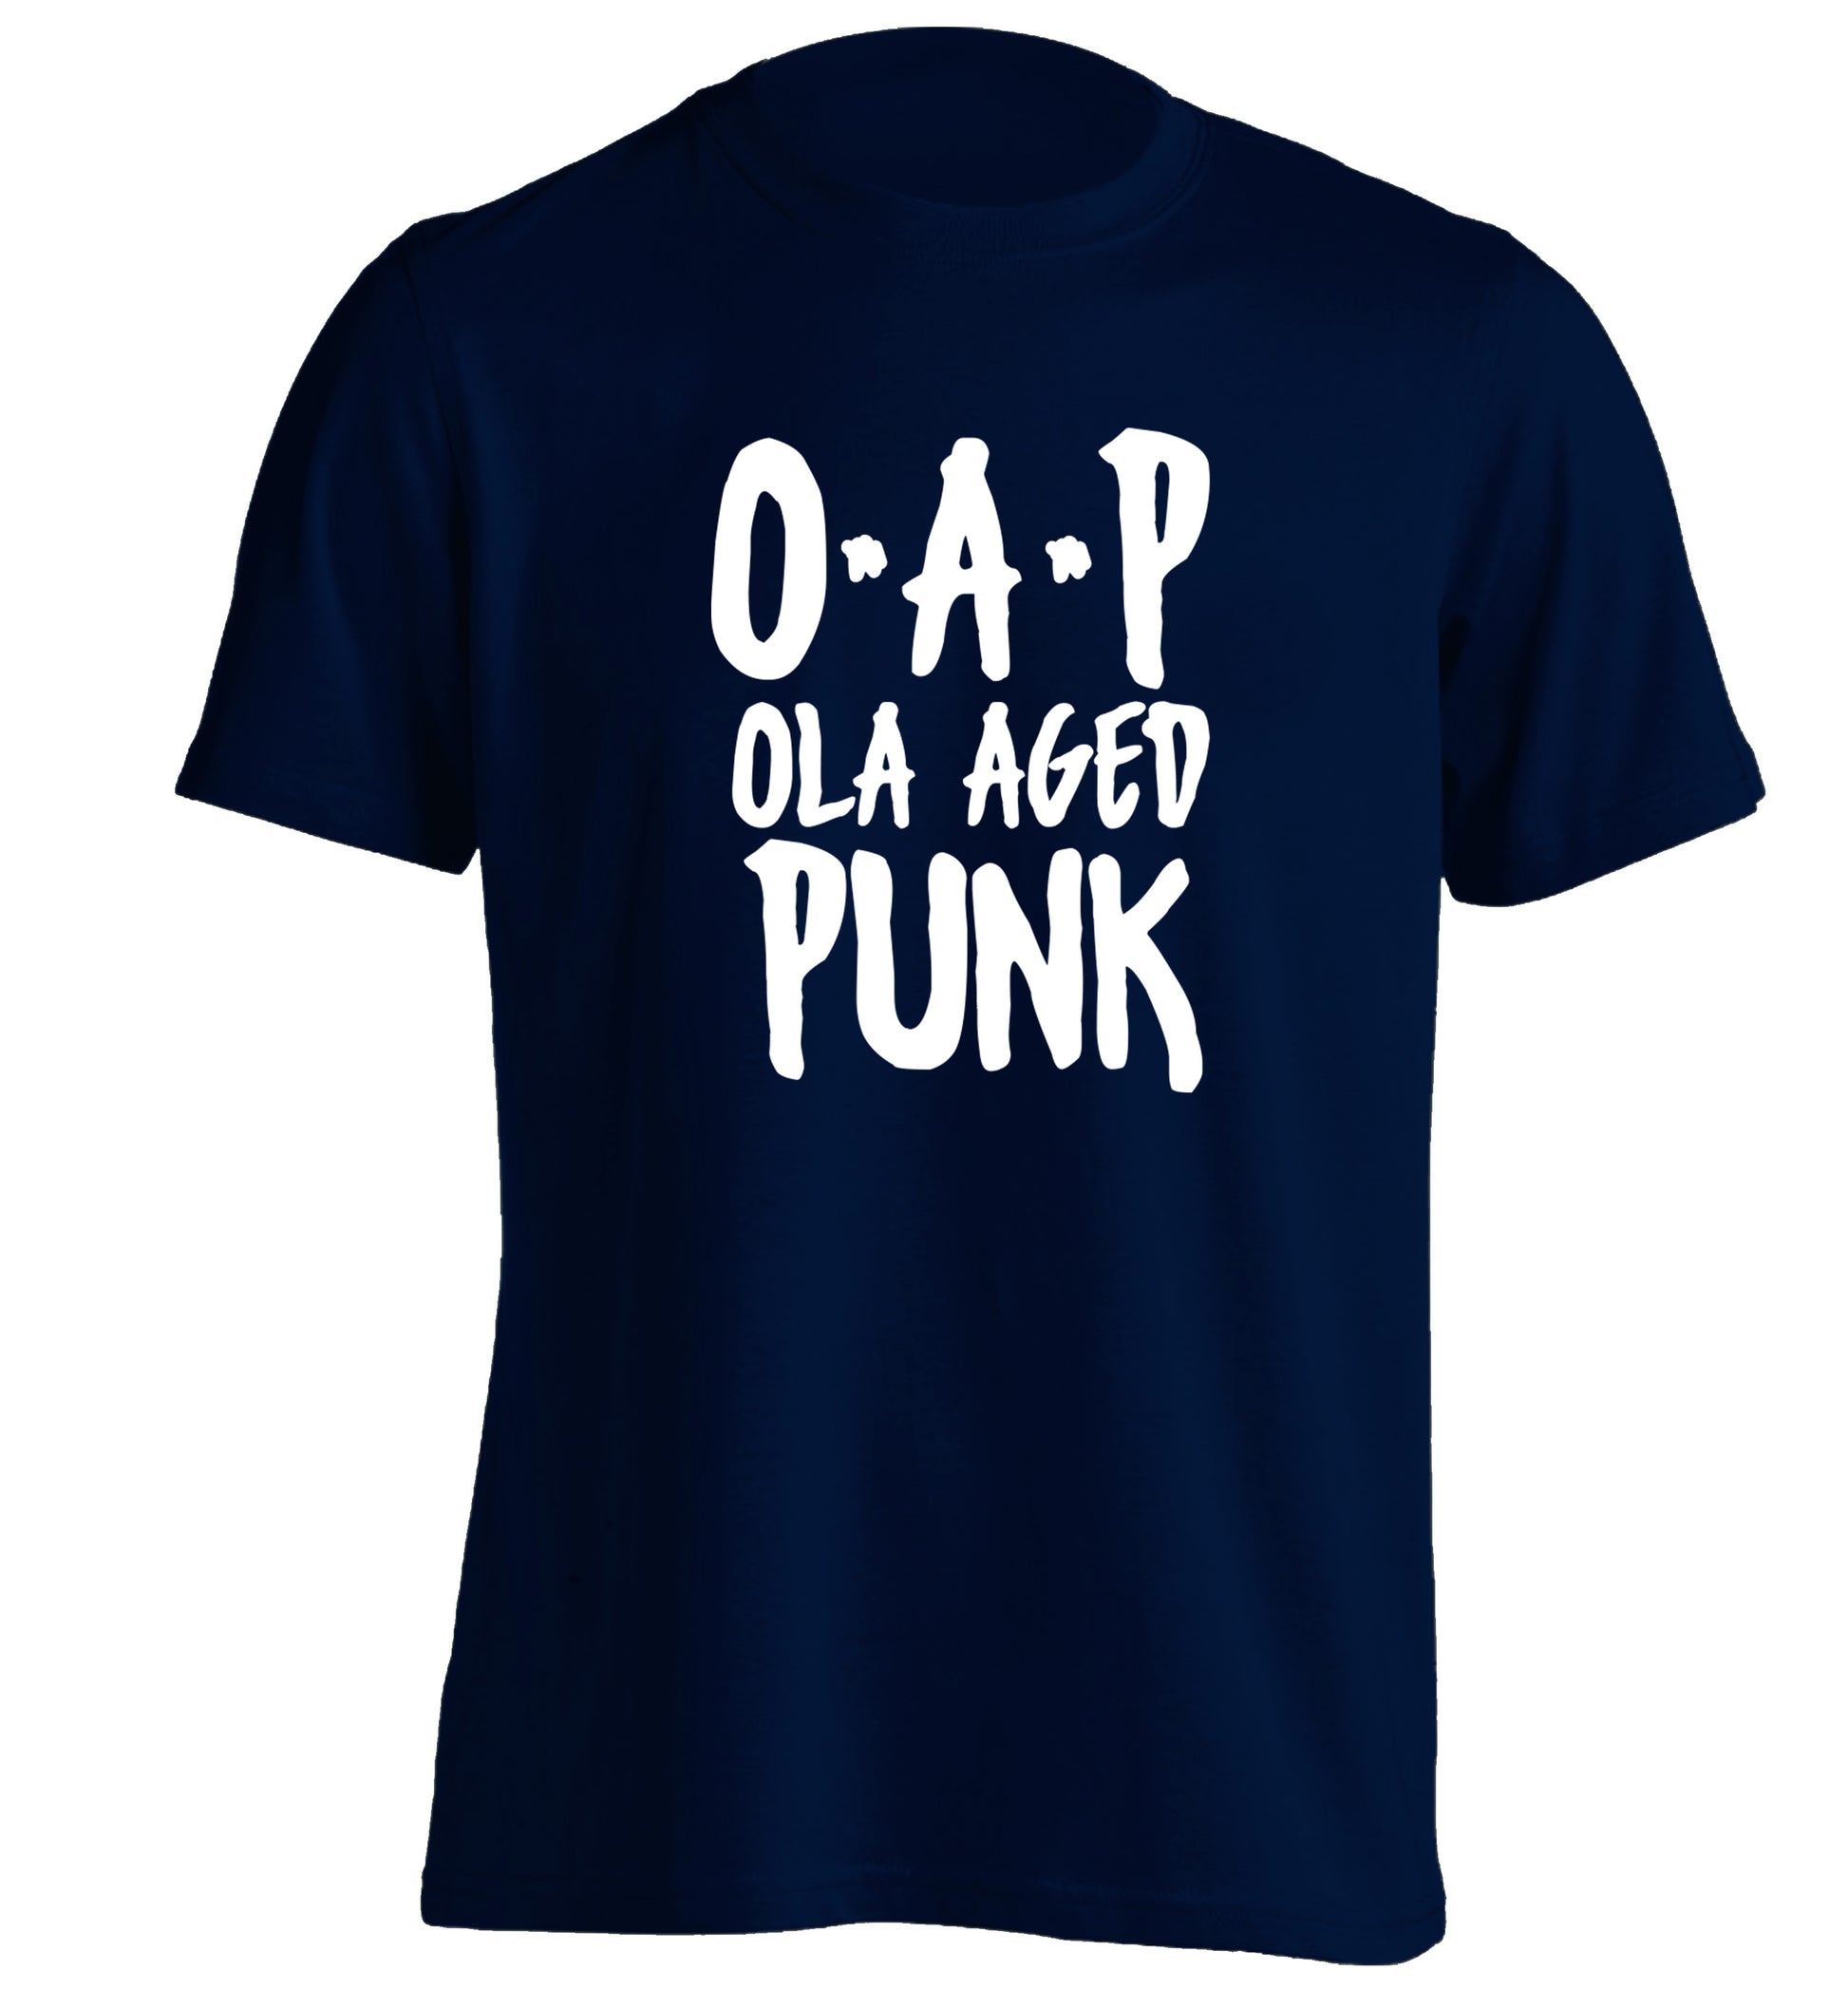 O.A.P Old Aged Punk adults unisex navy Tshirt 2XL